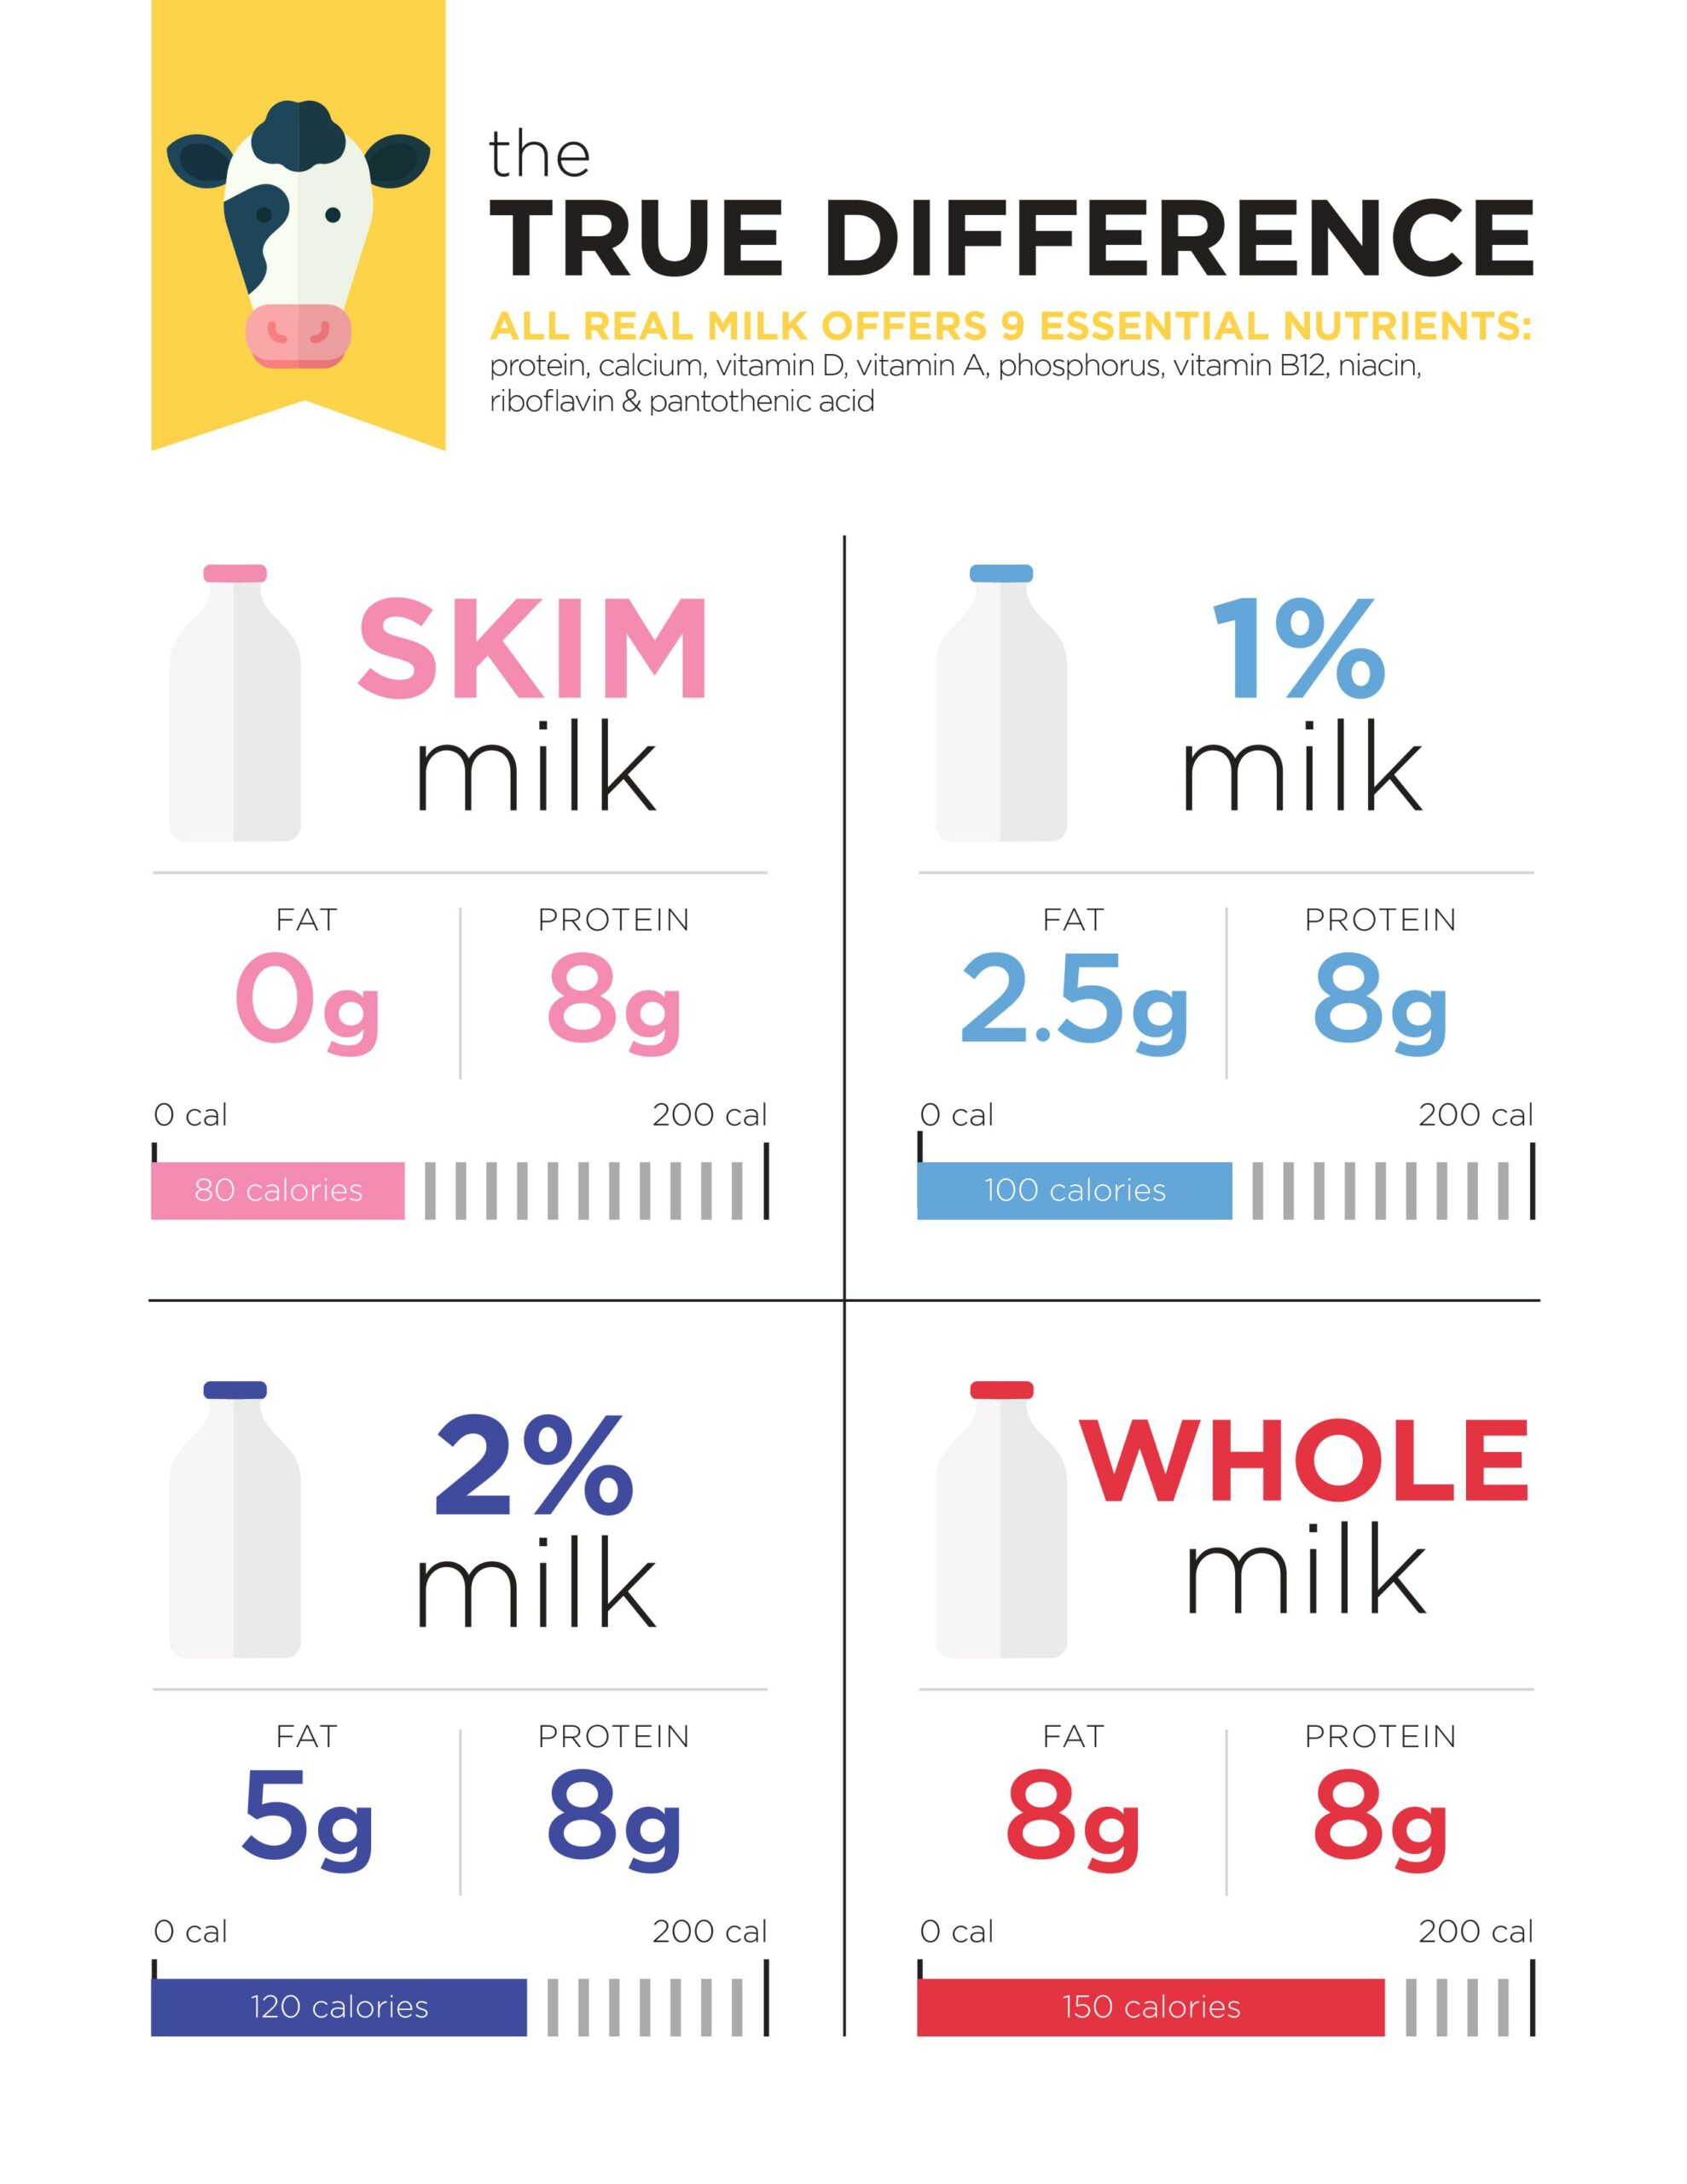 b12 whole milk vs skim milk